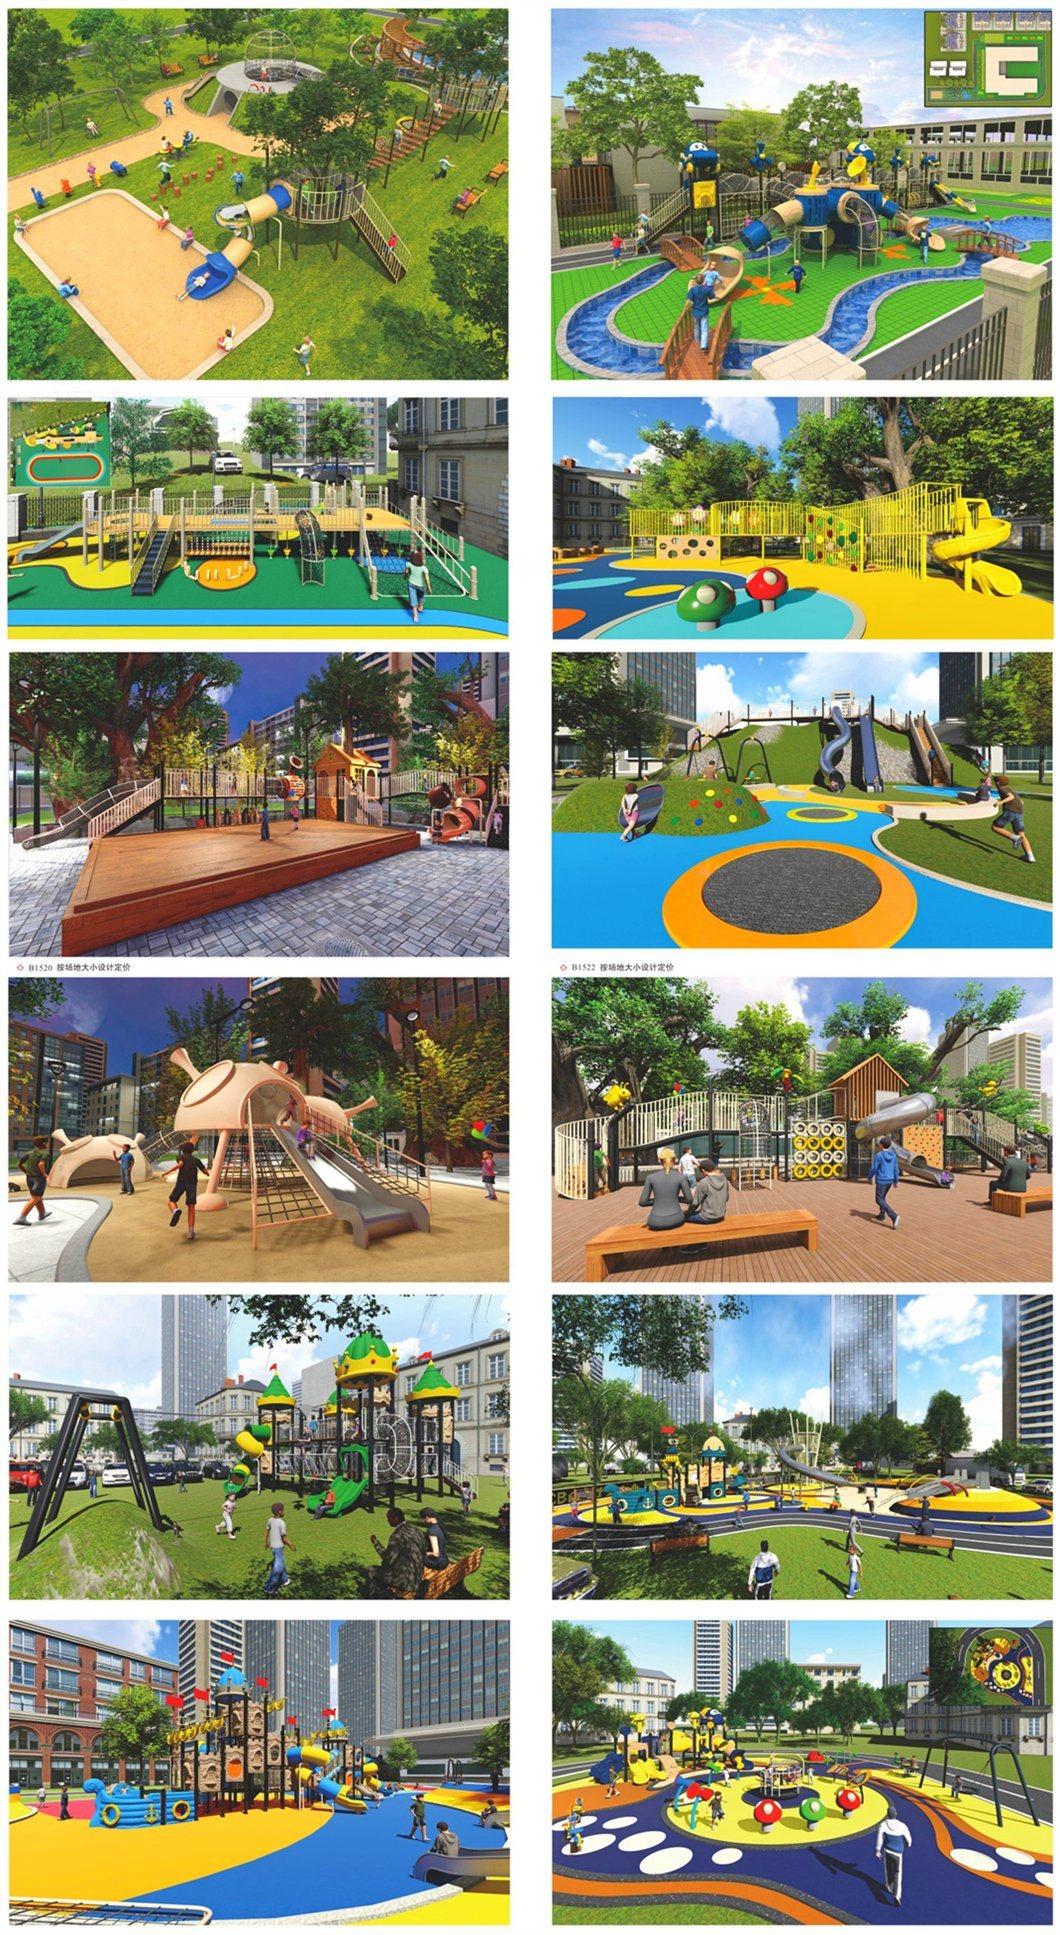 New Outdoor Children′s Large Crawl Slide Park Scenic Playground Equipment